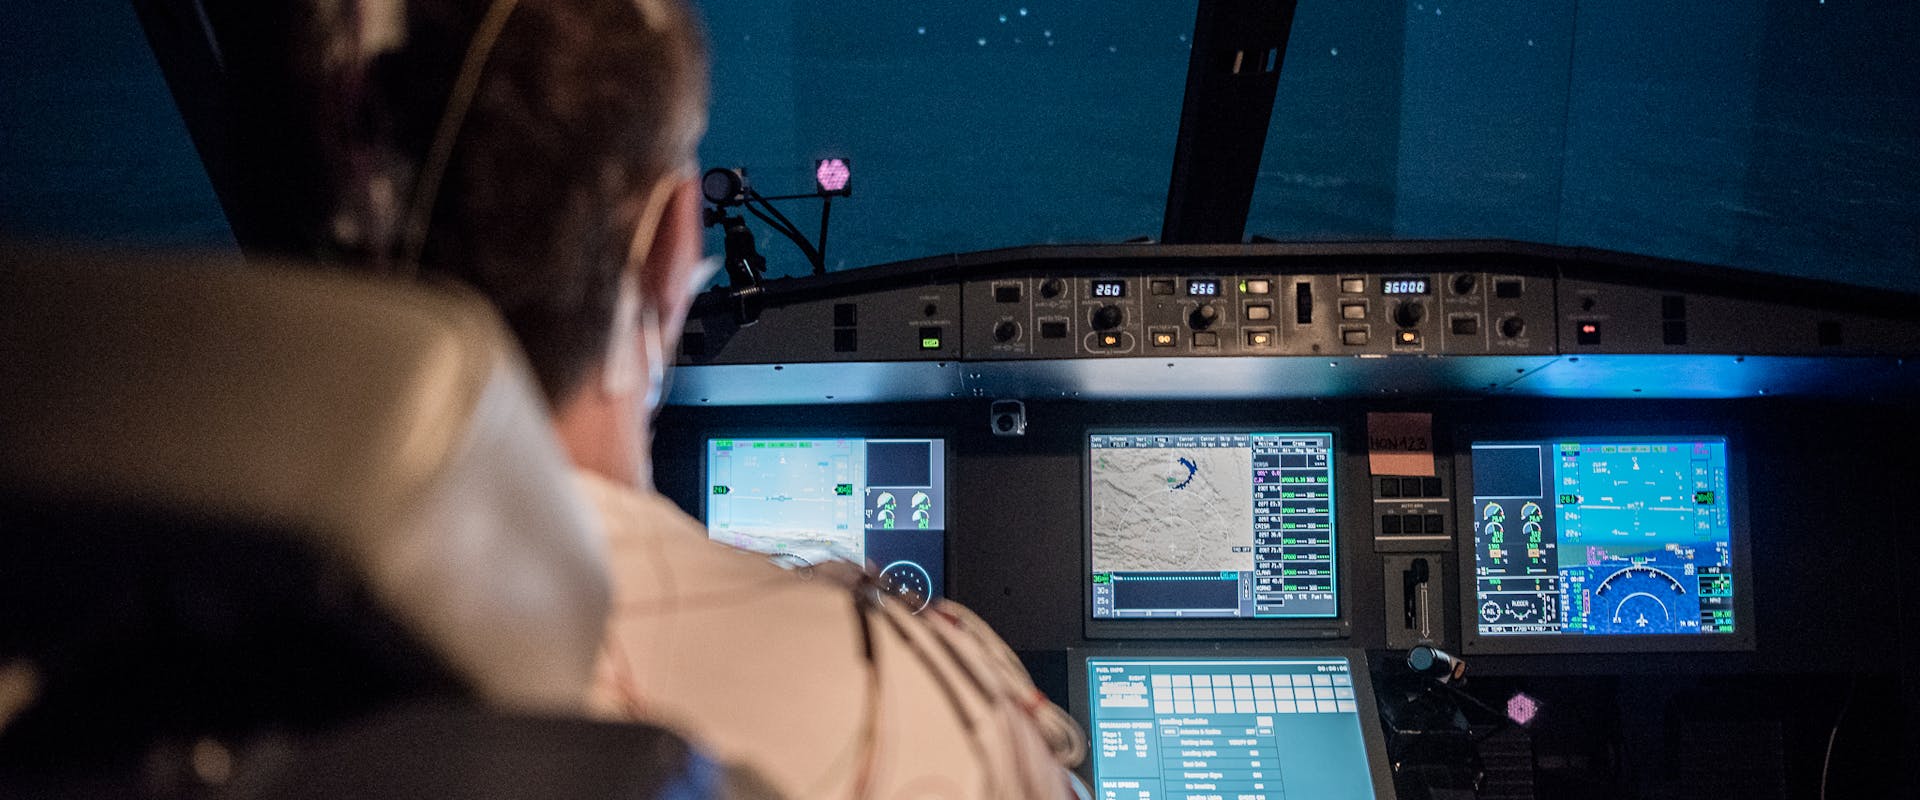 Artificial intelligence can help make aircraft even safer.